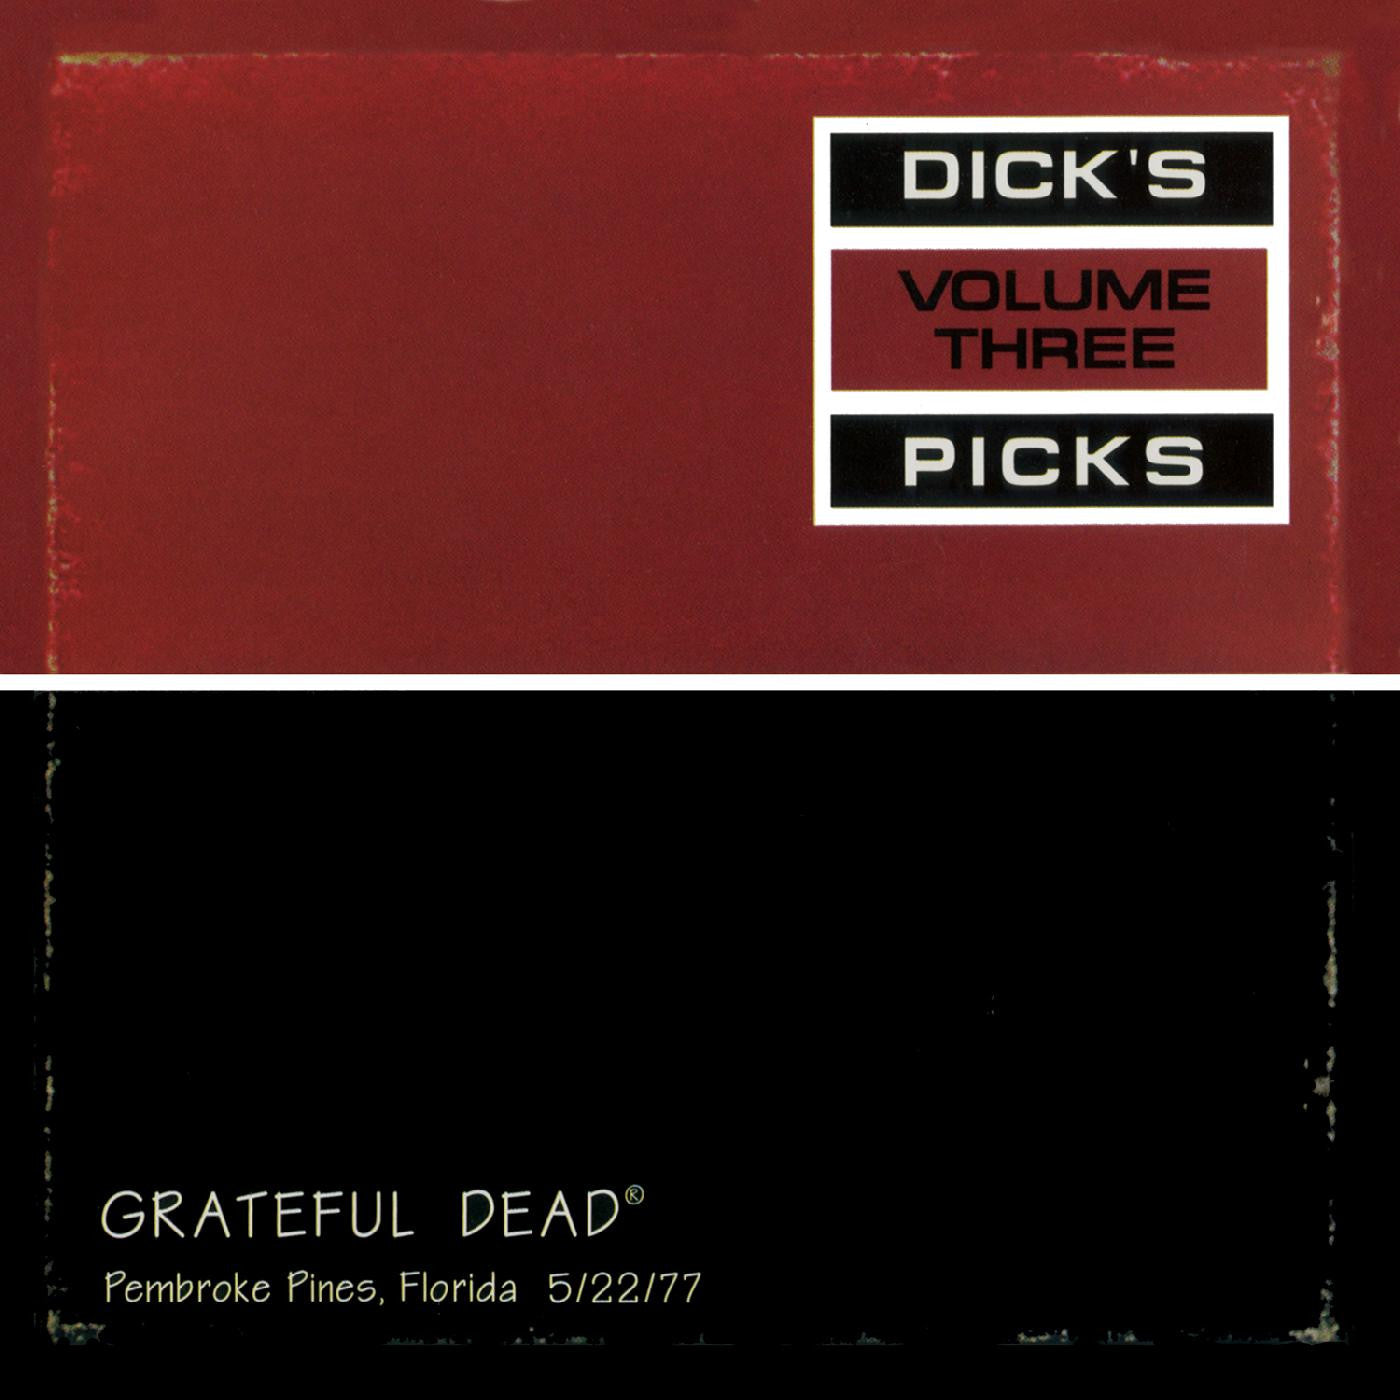 GRATEFUL DEAD 'DICK'S PICKS VOL. 3 PEMBROKE PINES, FLORIDA 5/22/77' 2CD